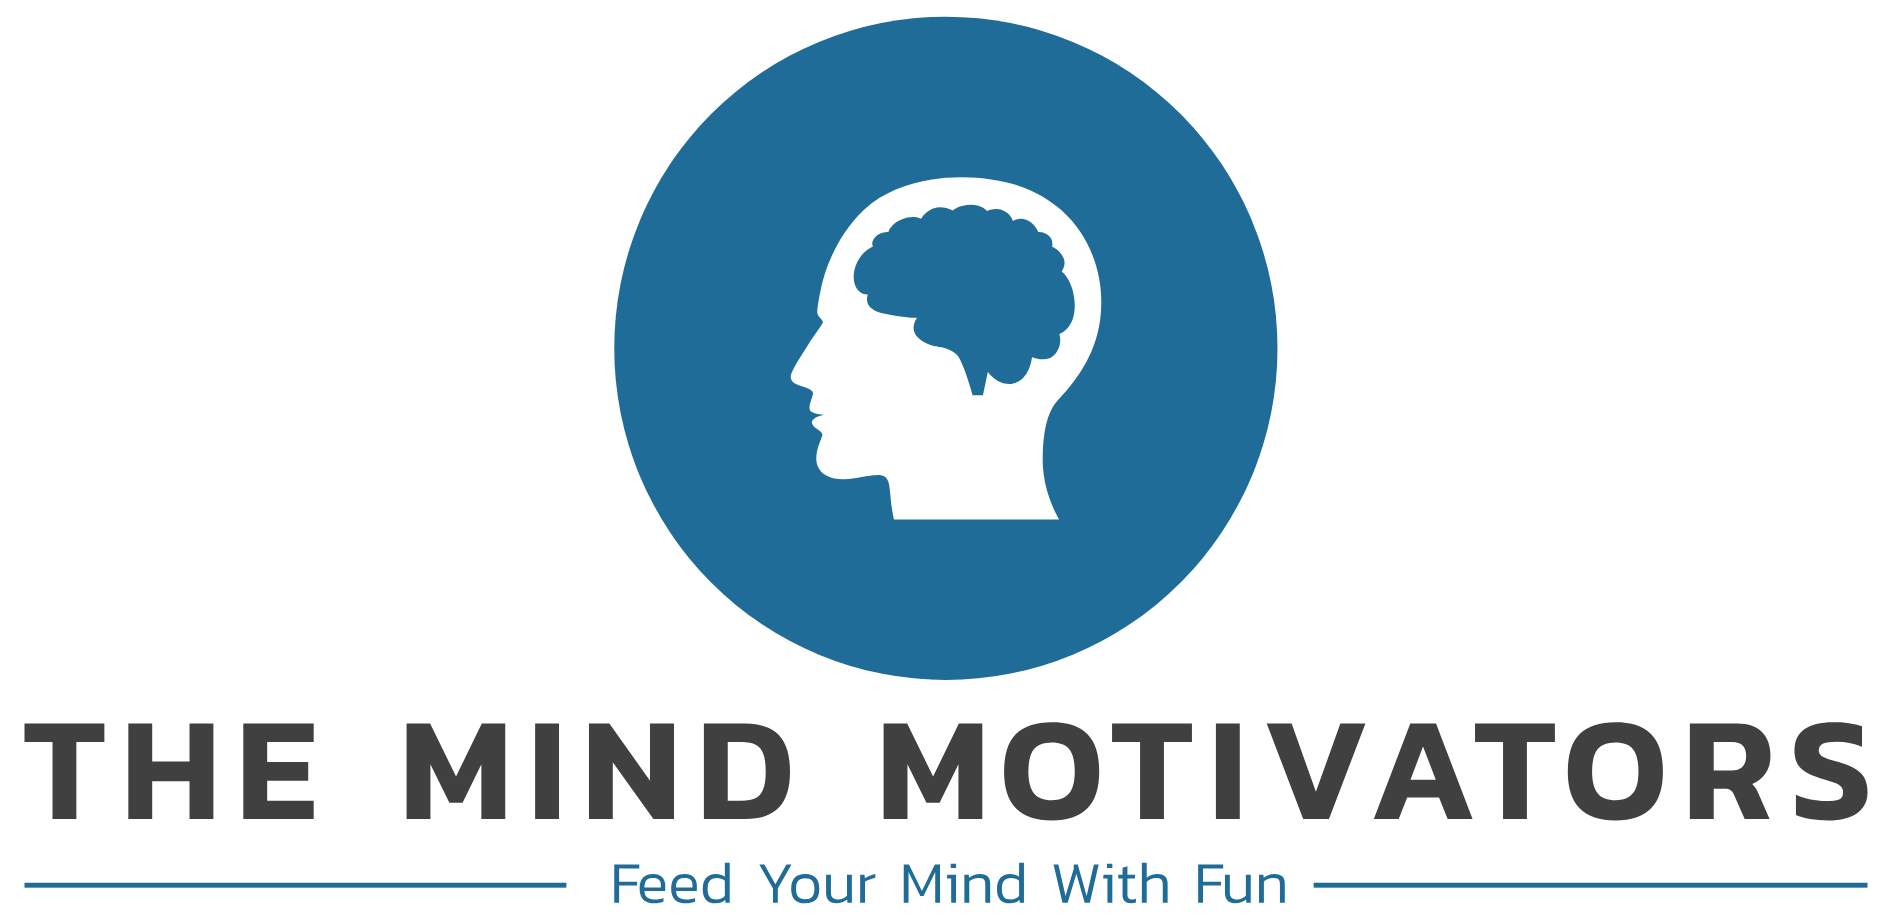 The Mind Motivators